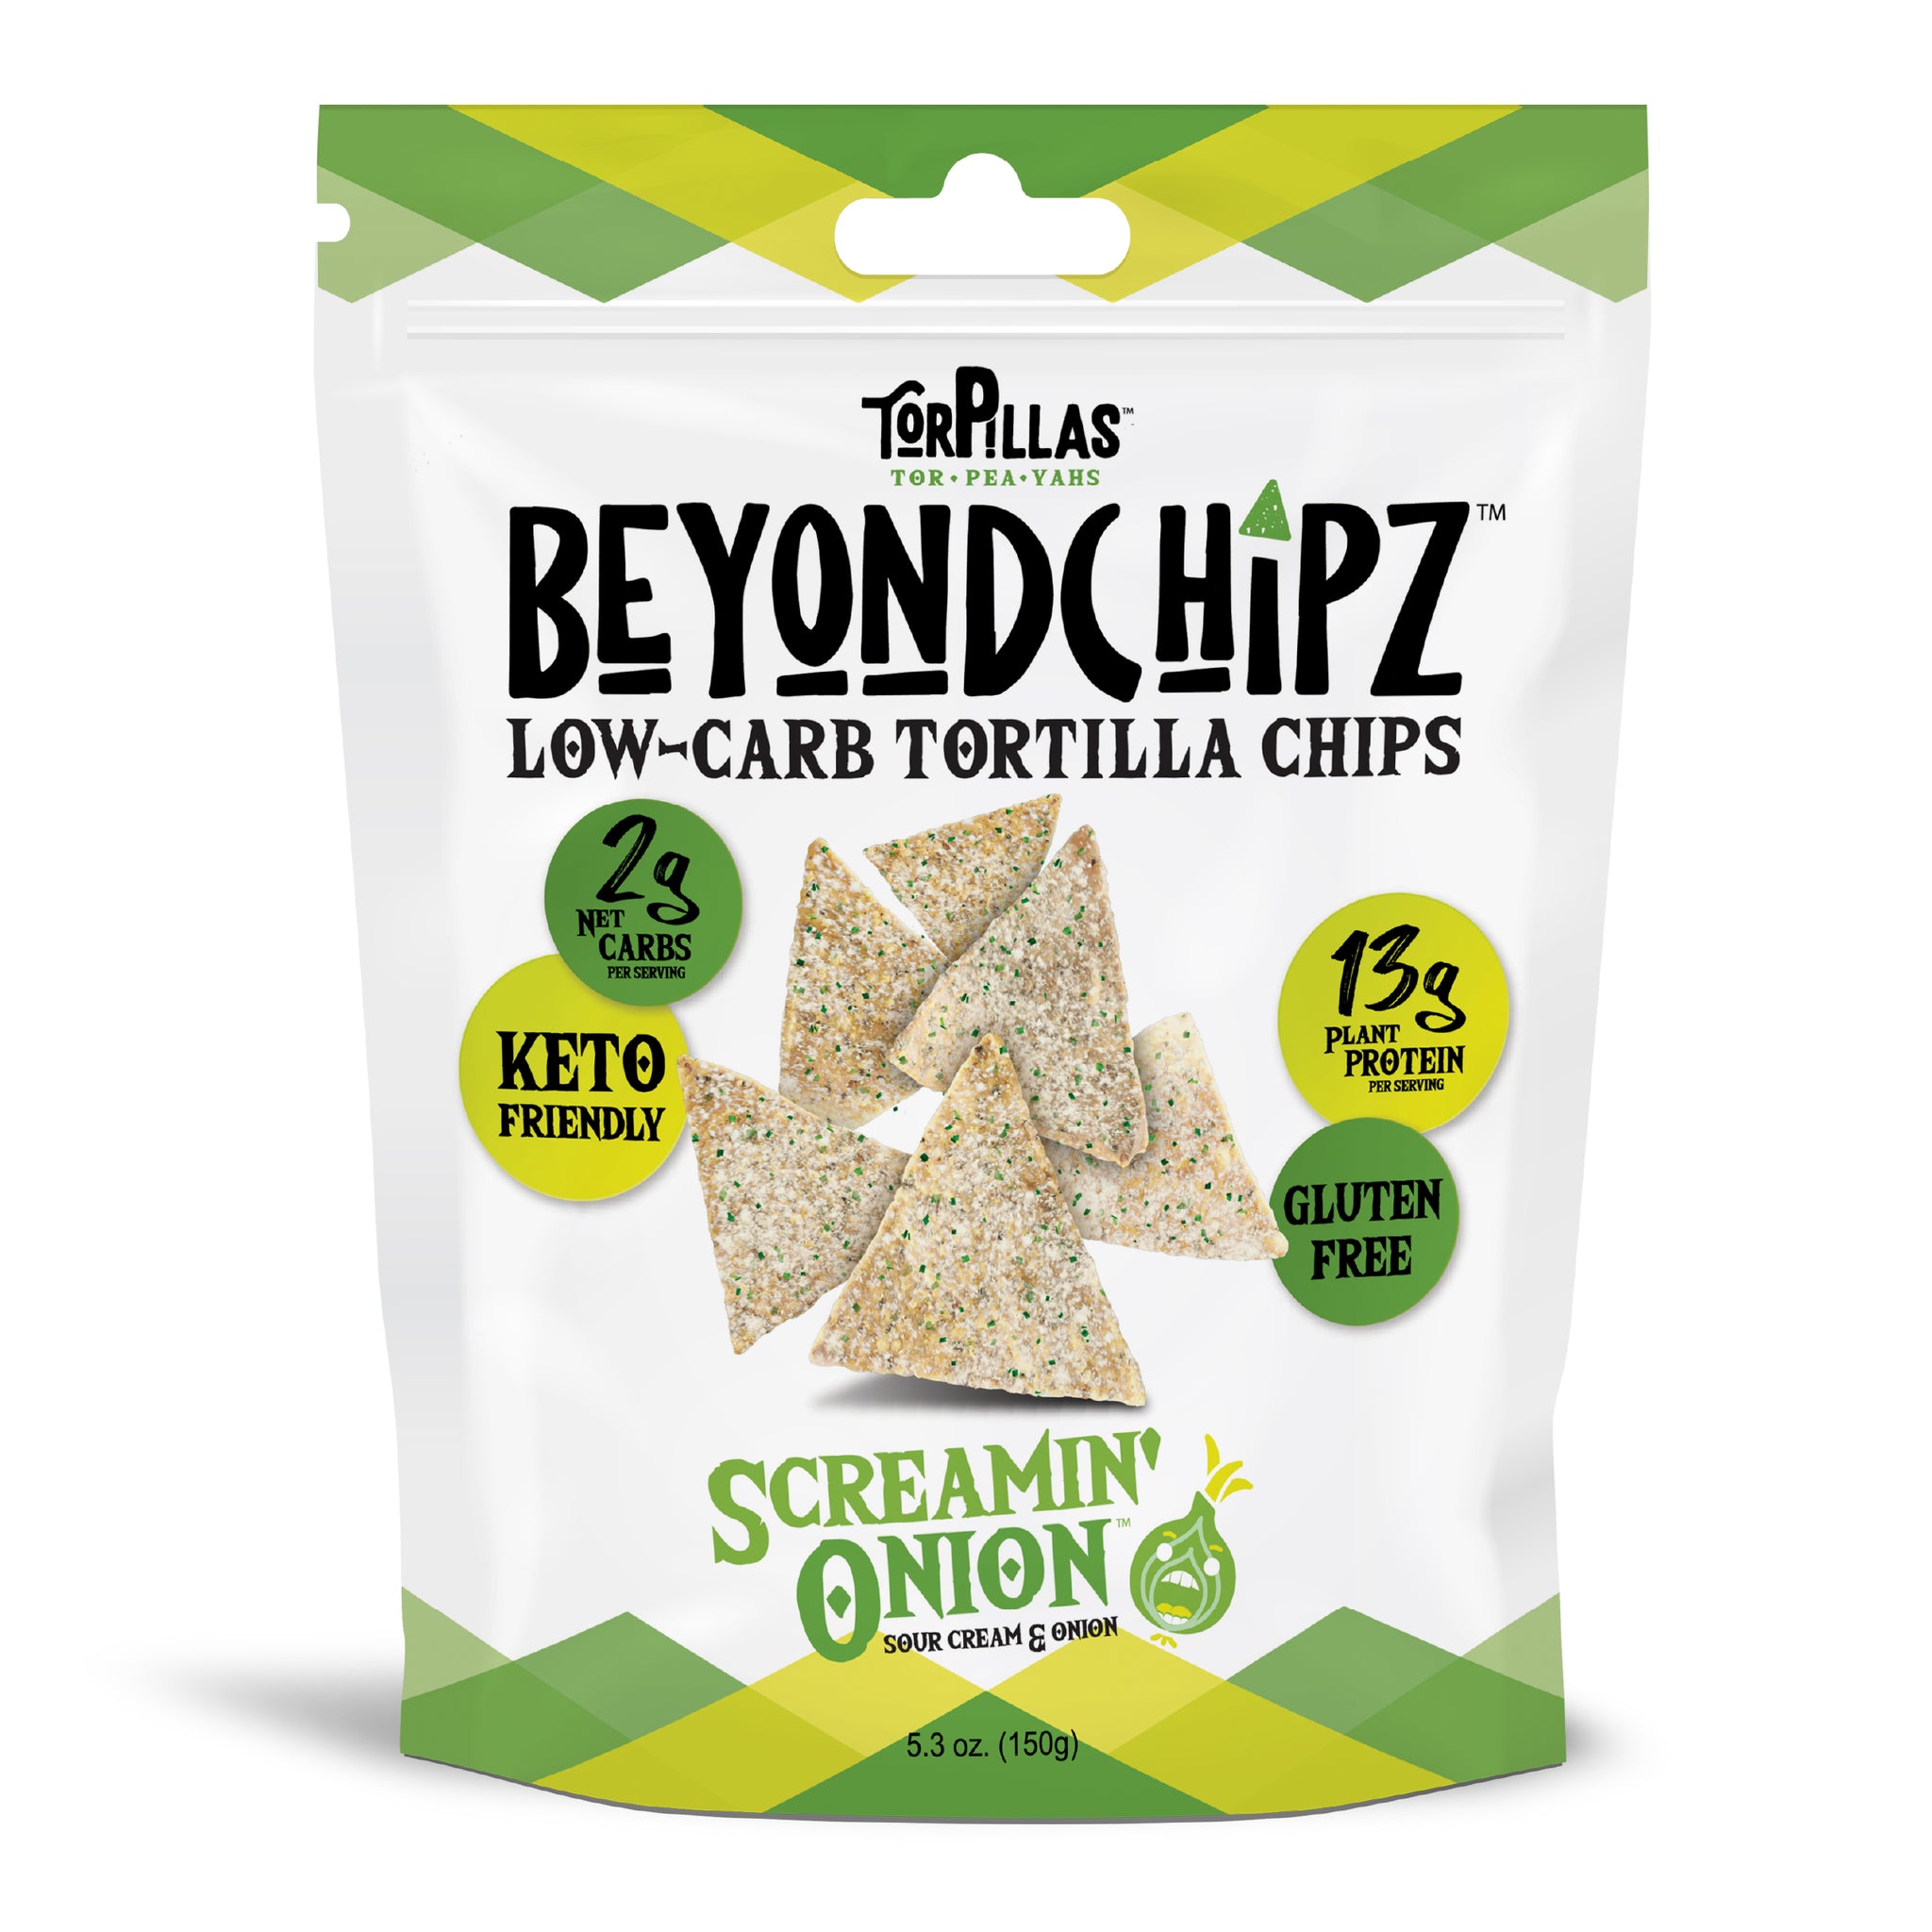 Single Bags of Chipz – BeyondChipz